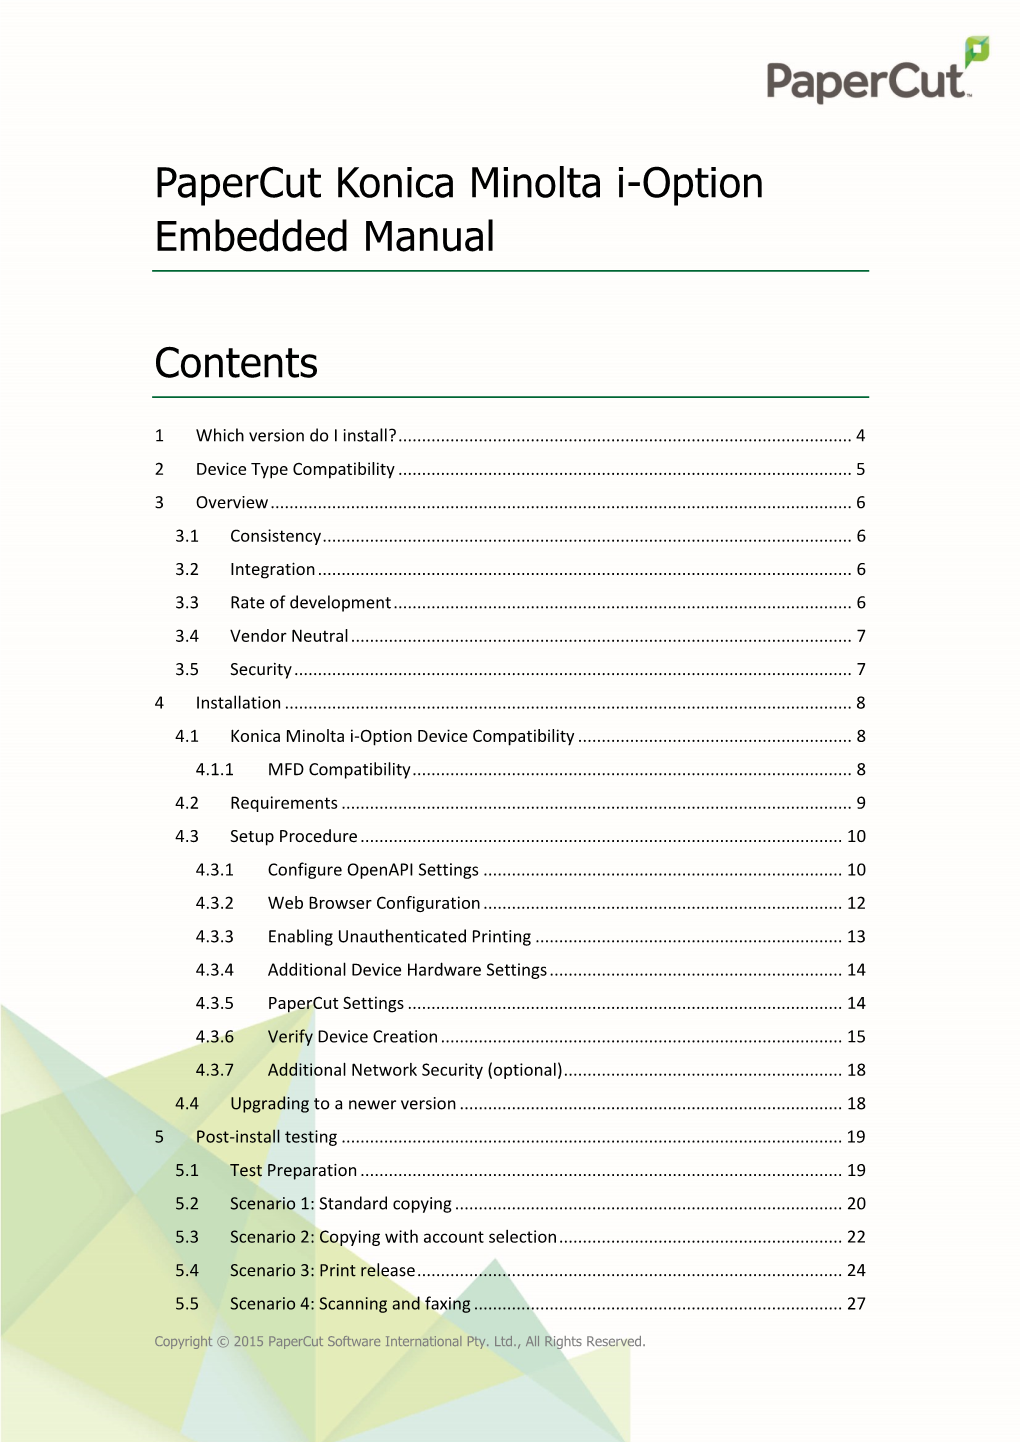 Papercut Konica Minolta I-Option Embedded Manual Contents